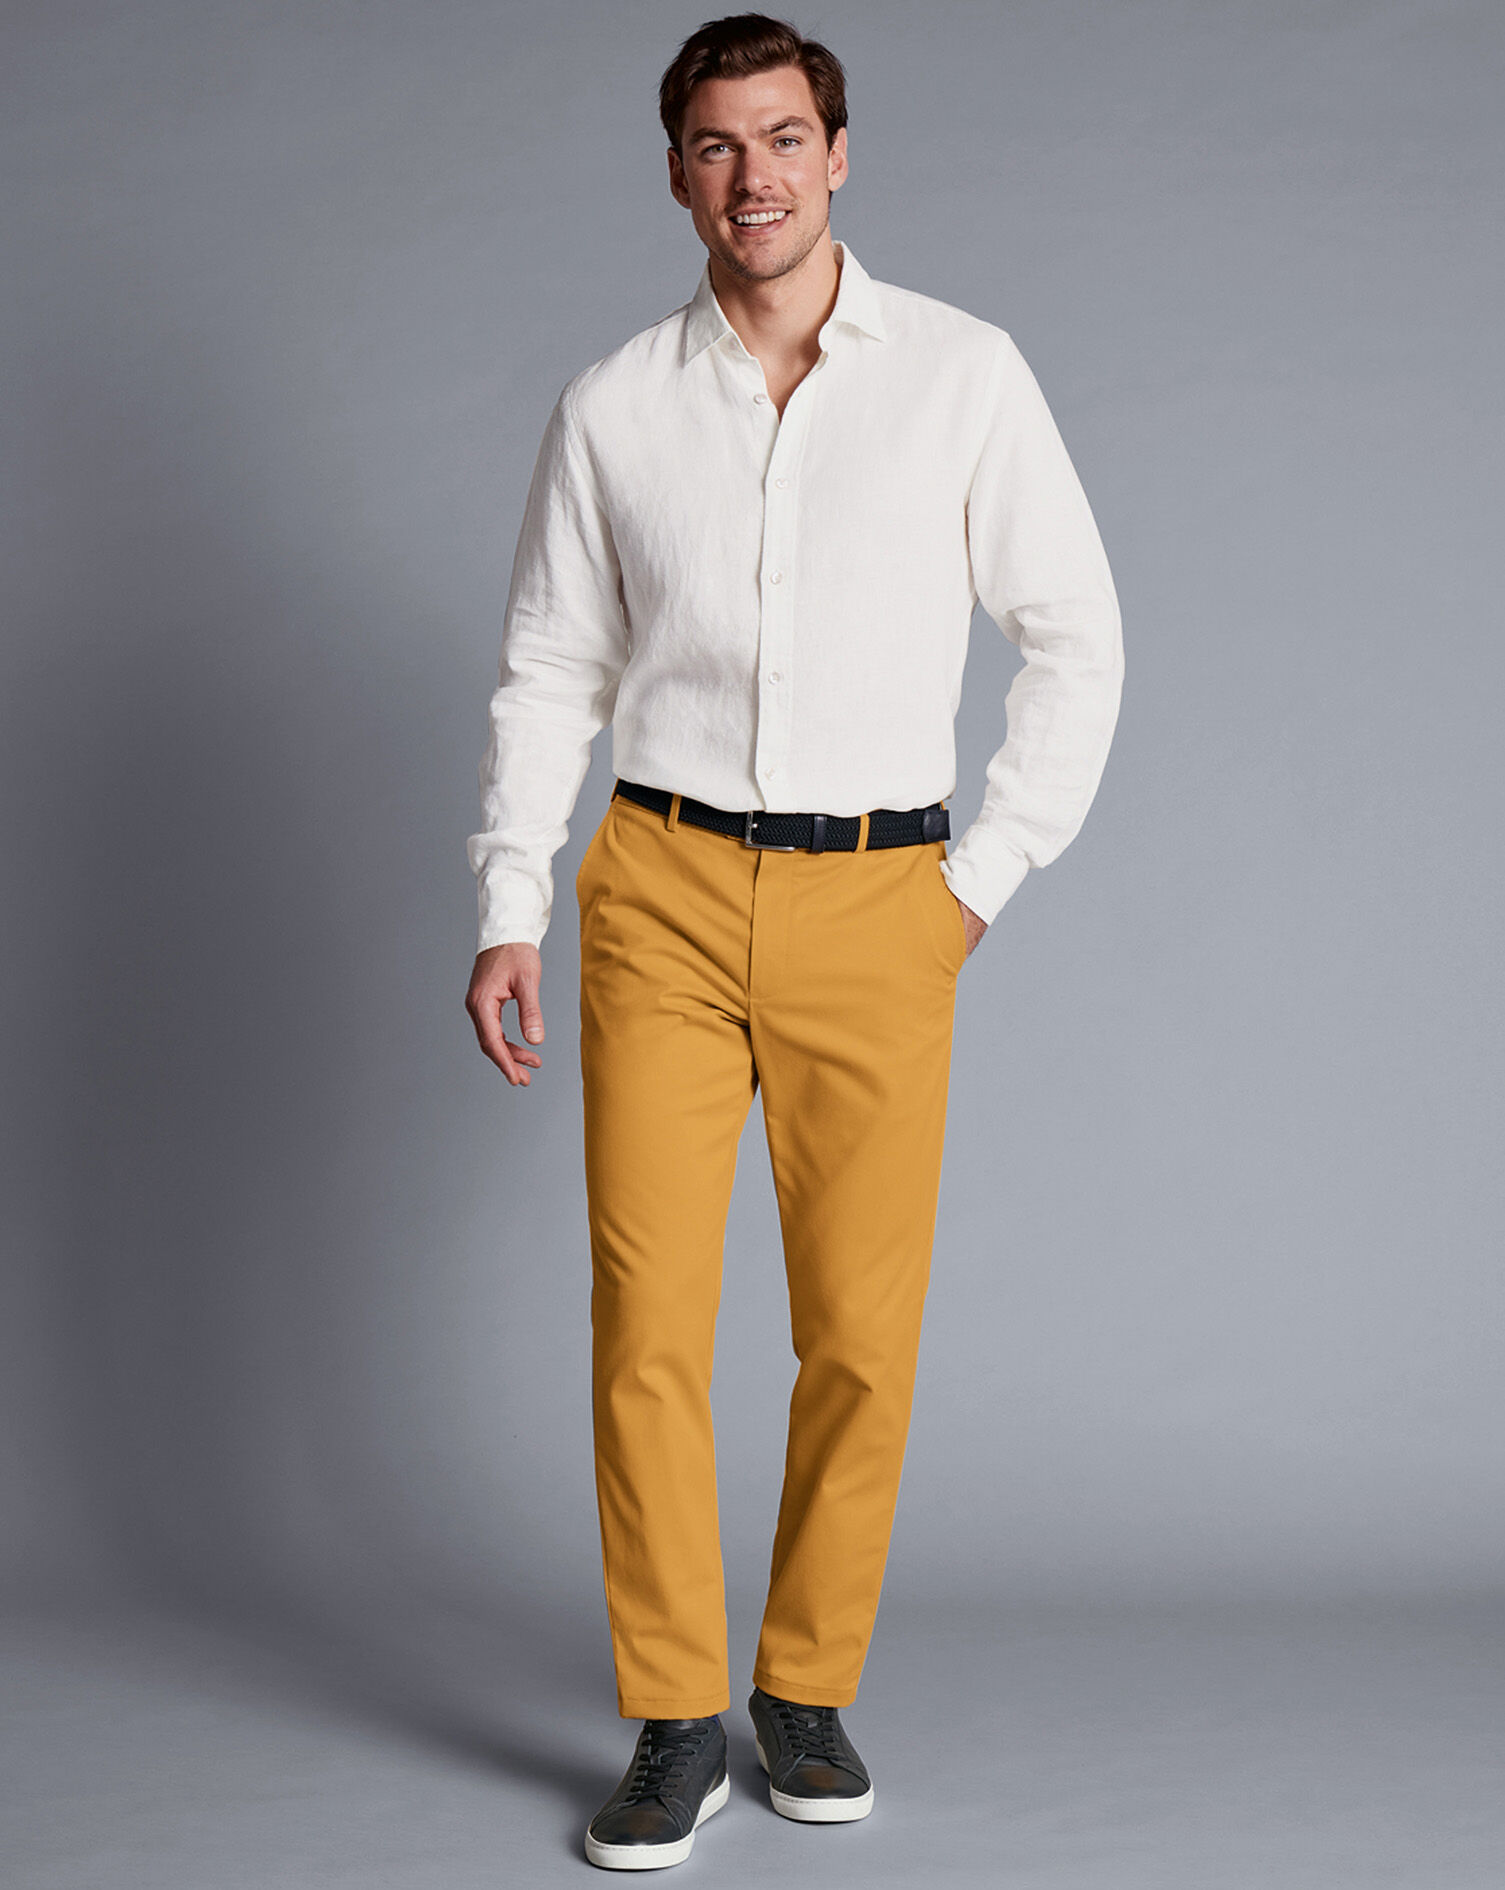 Men's Chinos yellow | Trousers for Men | Zalando